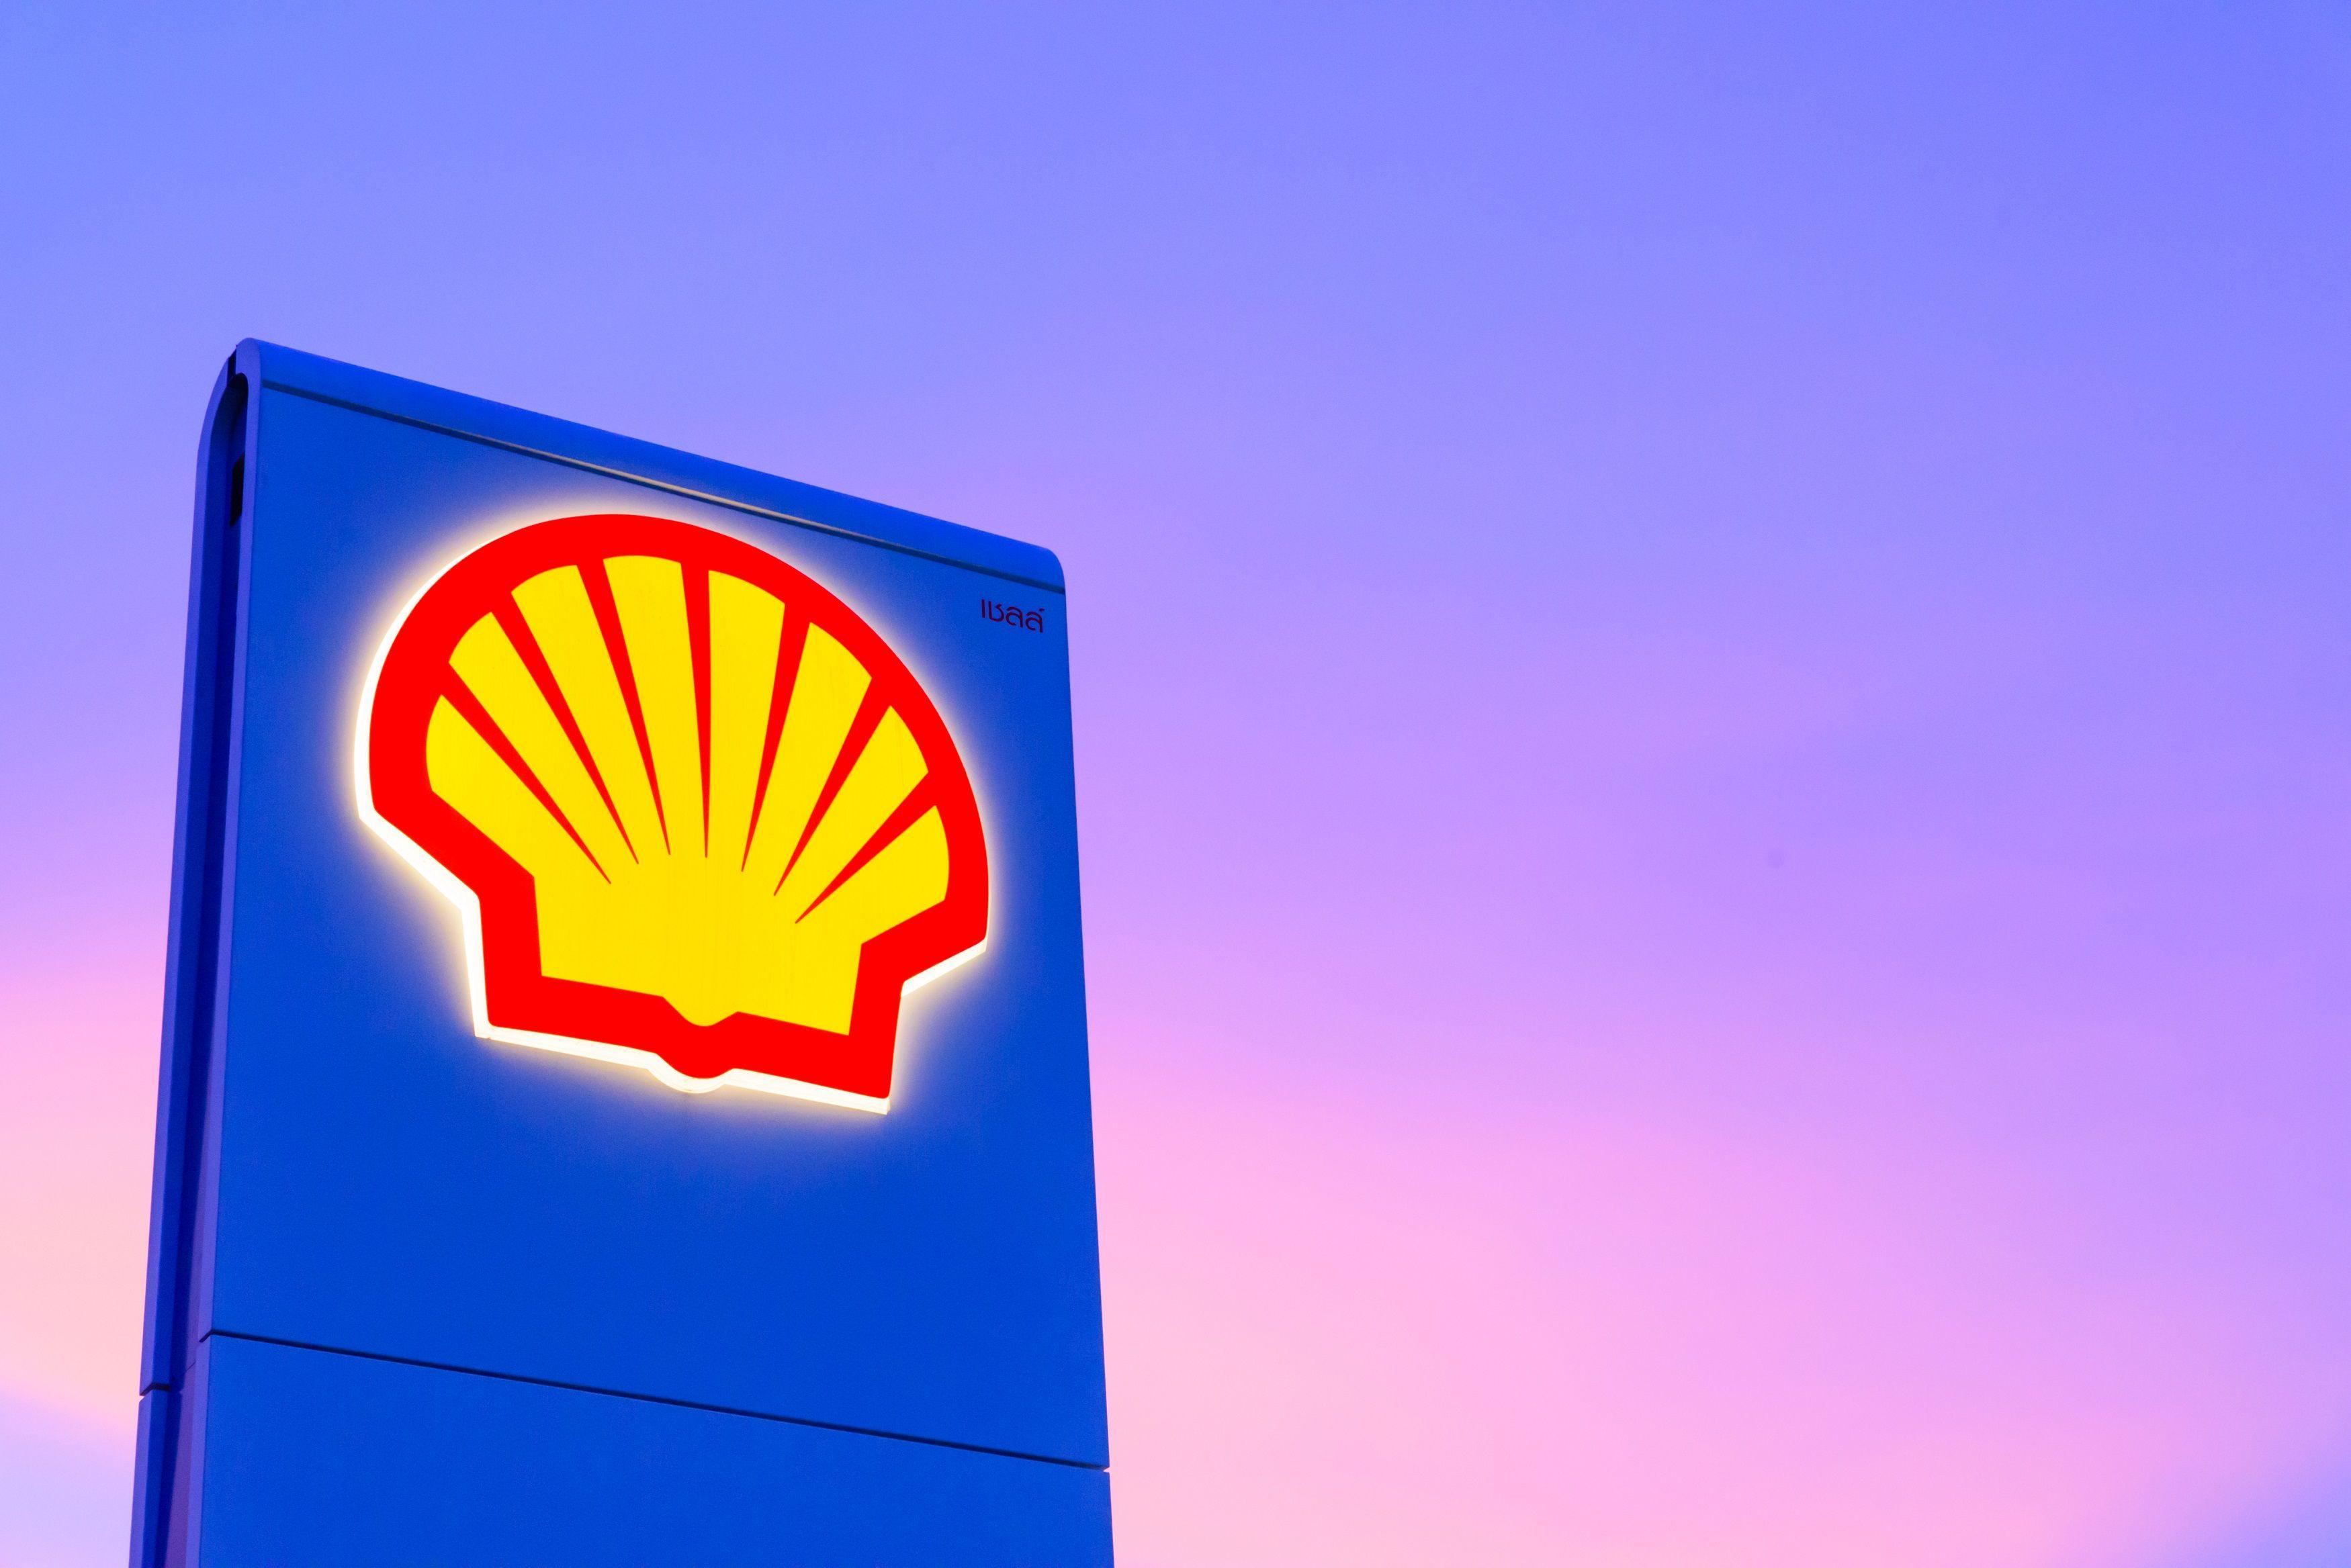 Shell Oil Company Logo - Oil & Gas Companies: Royal Dutch Shell. Oil & Gas IQ